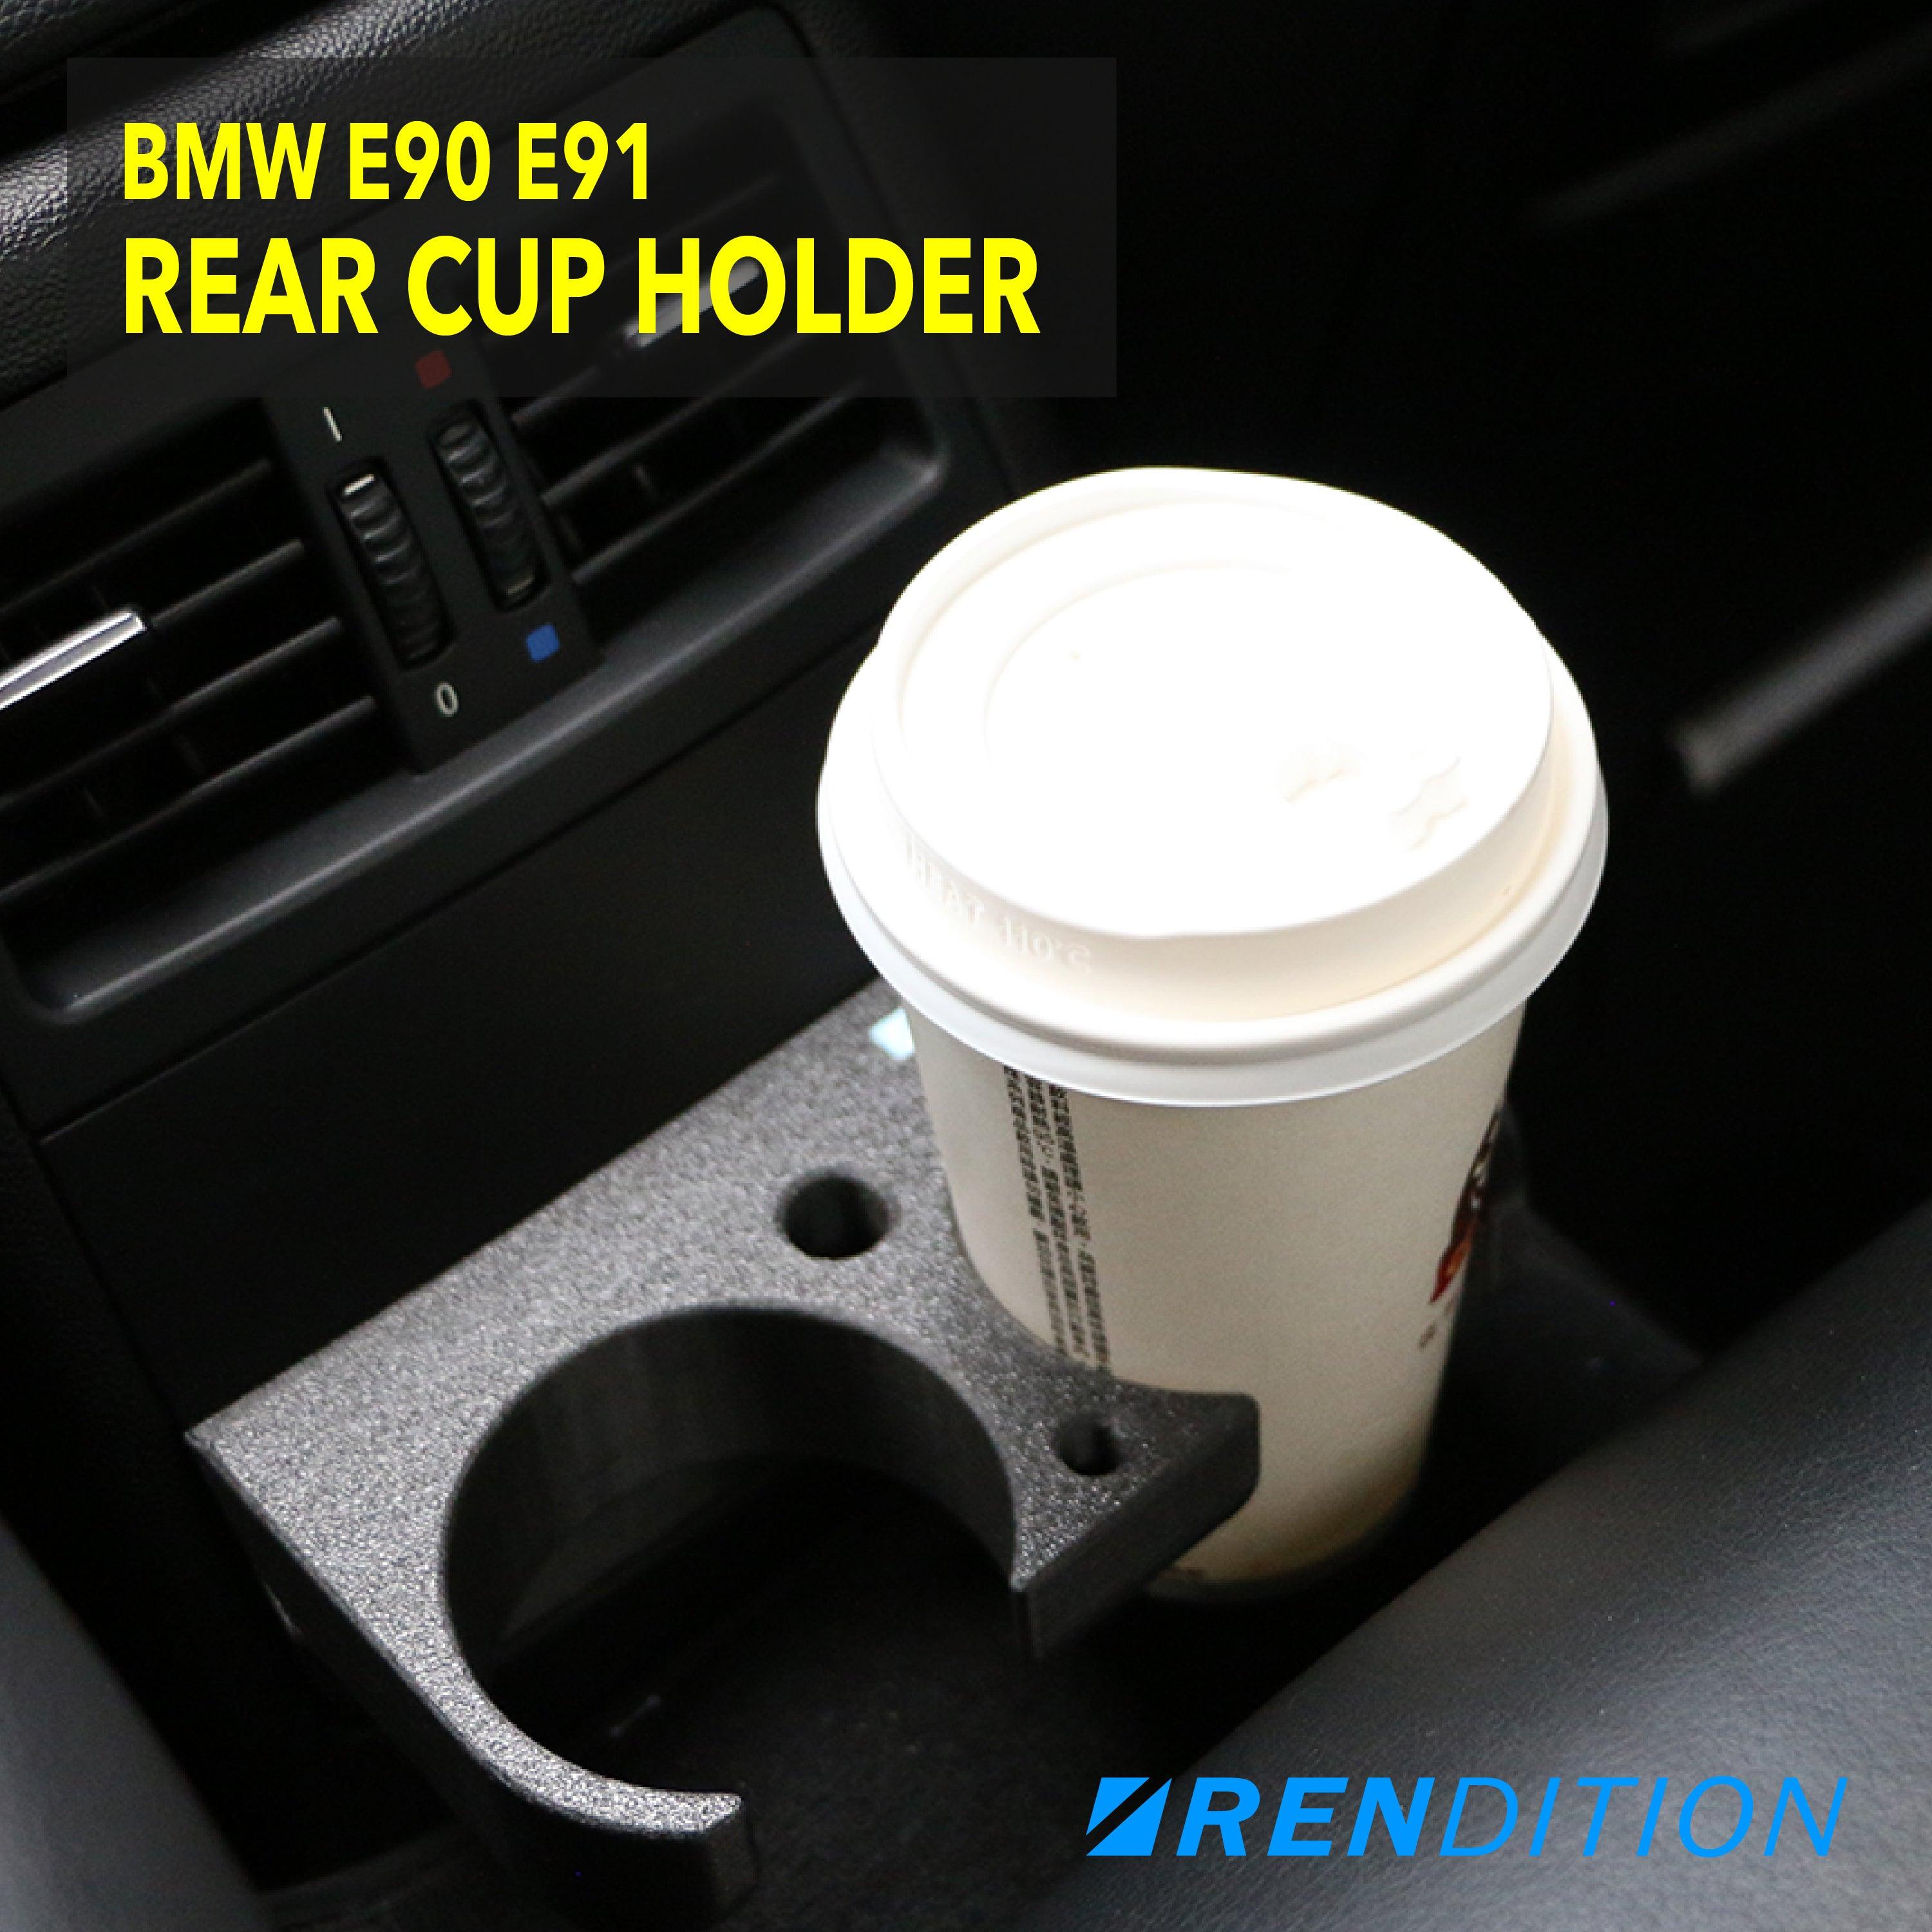 BMW E90 E91 REAR CUP HOLDER V2 - K2 Industries